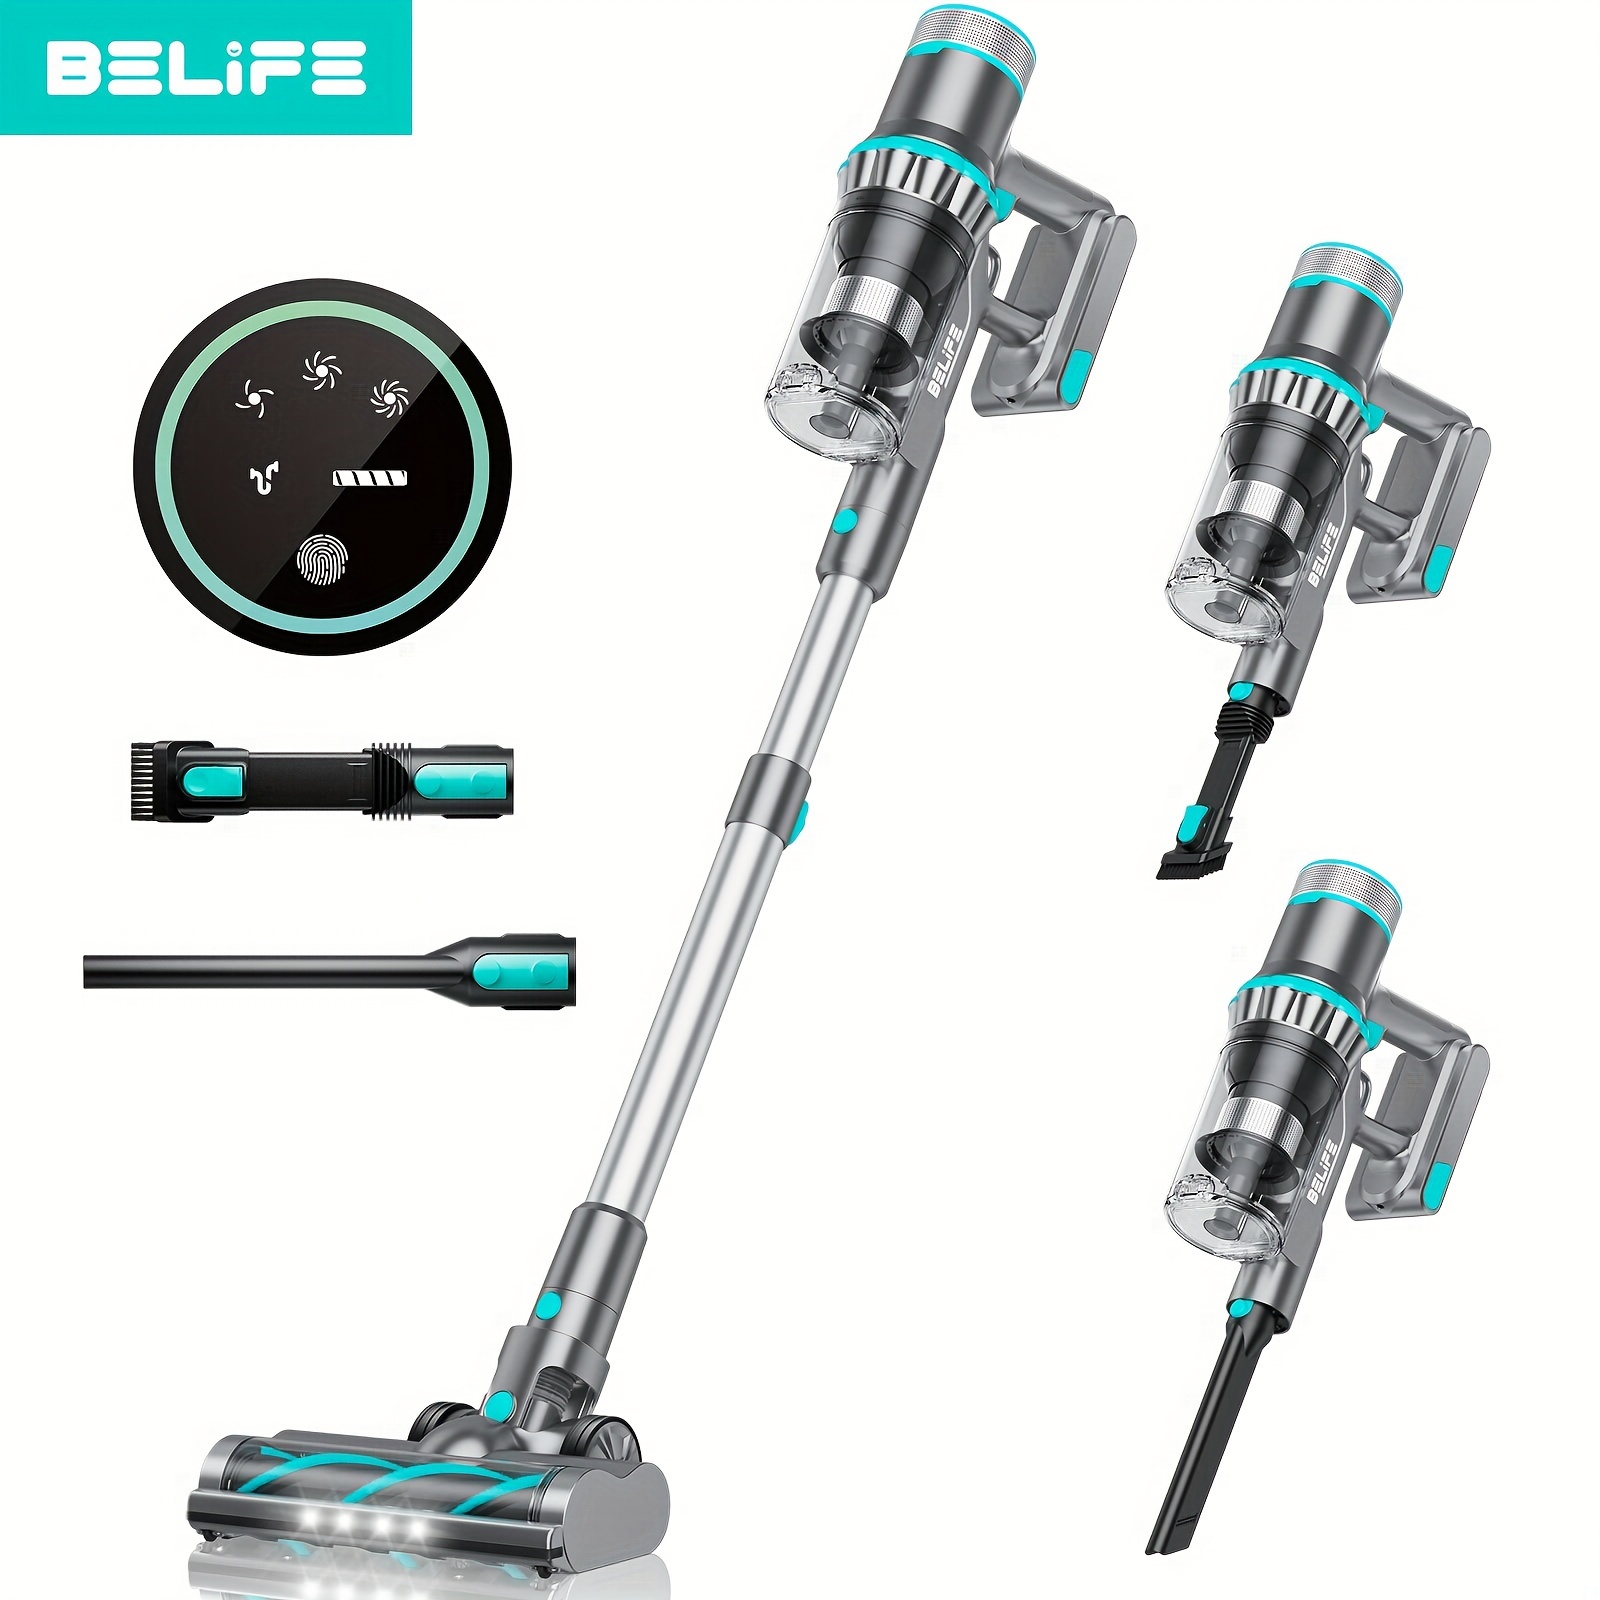 

Belife Bvc11 Cordless Vacuum Cleaner, 38kpa/450w Stick Vacuum With Brushless Motor, Led Display, 6 In 1 Powerful Lightweight Vaccum For Hardwood Floor Car Pet Hair